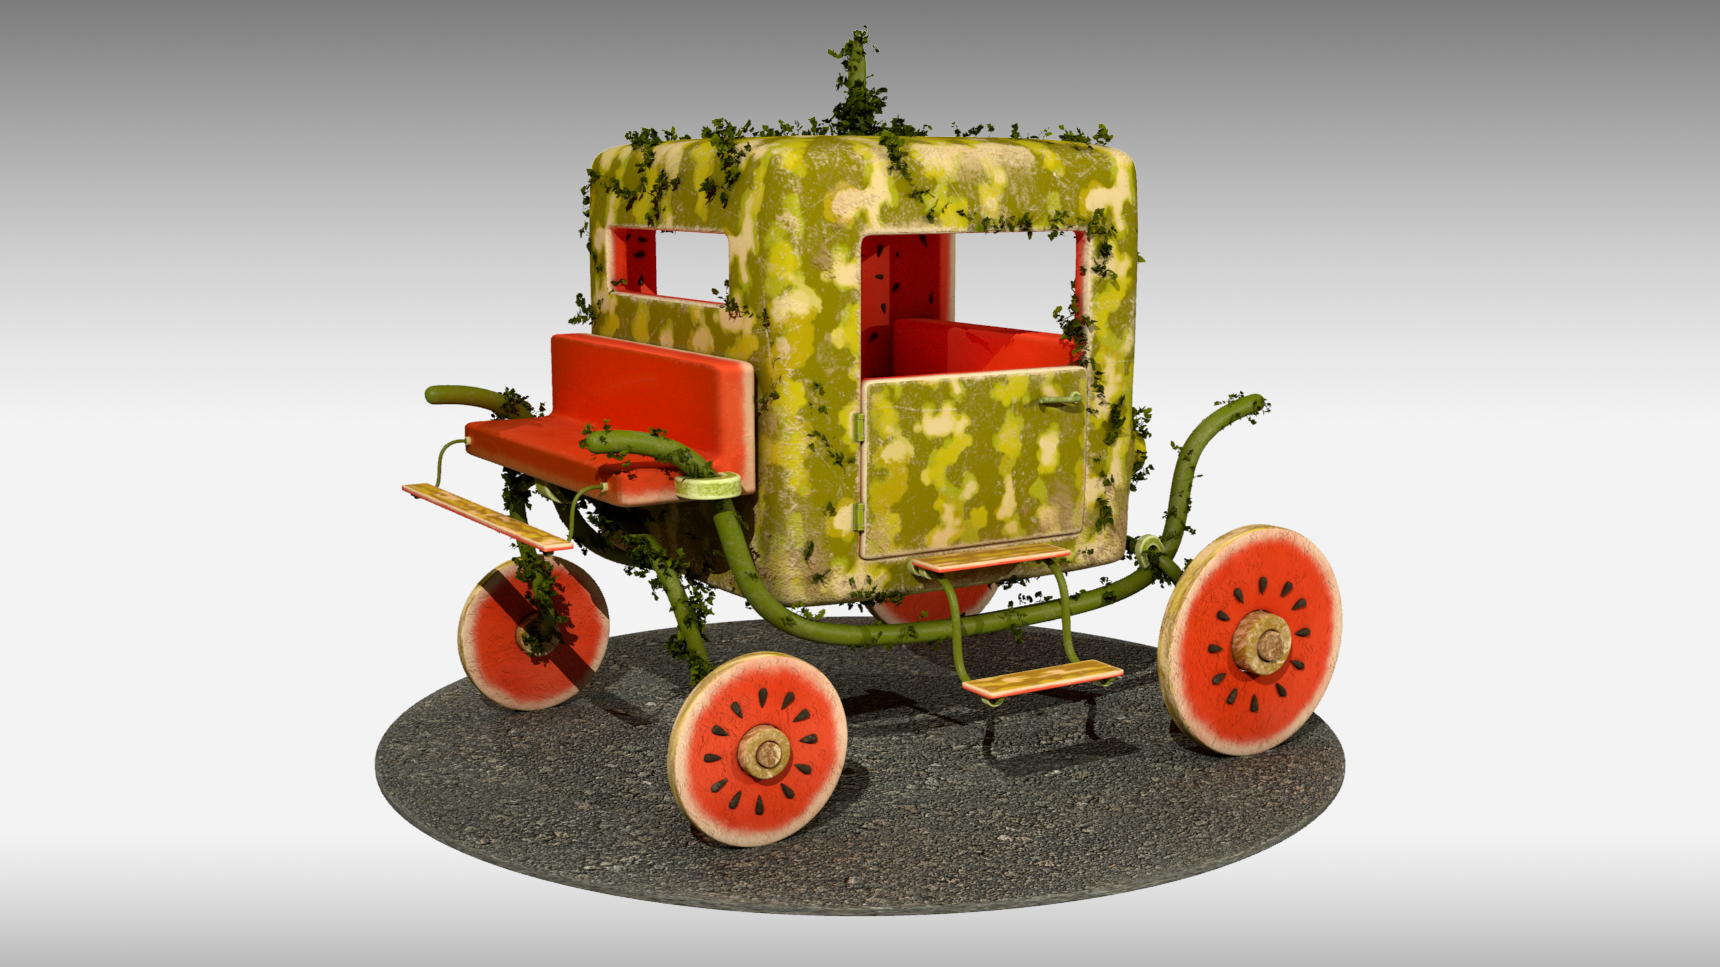 A digital watermelon-themed carriage